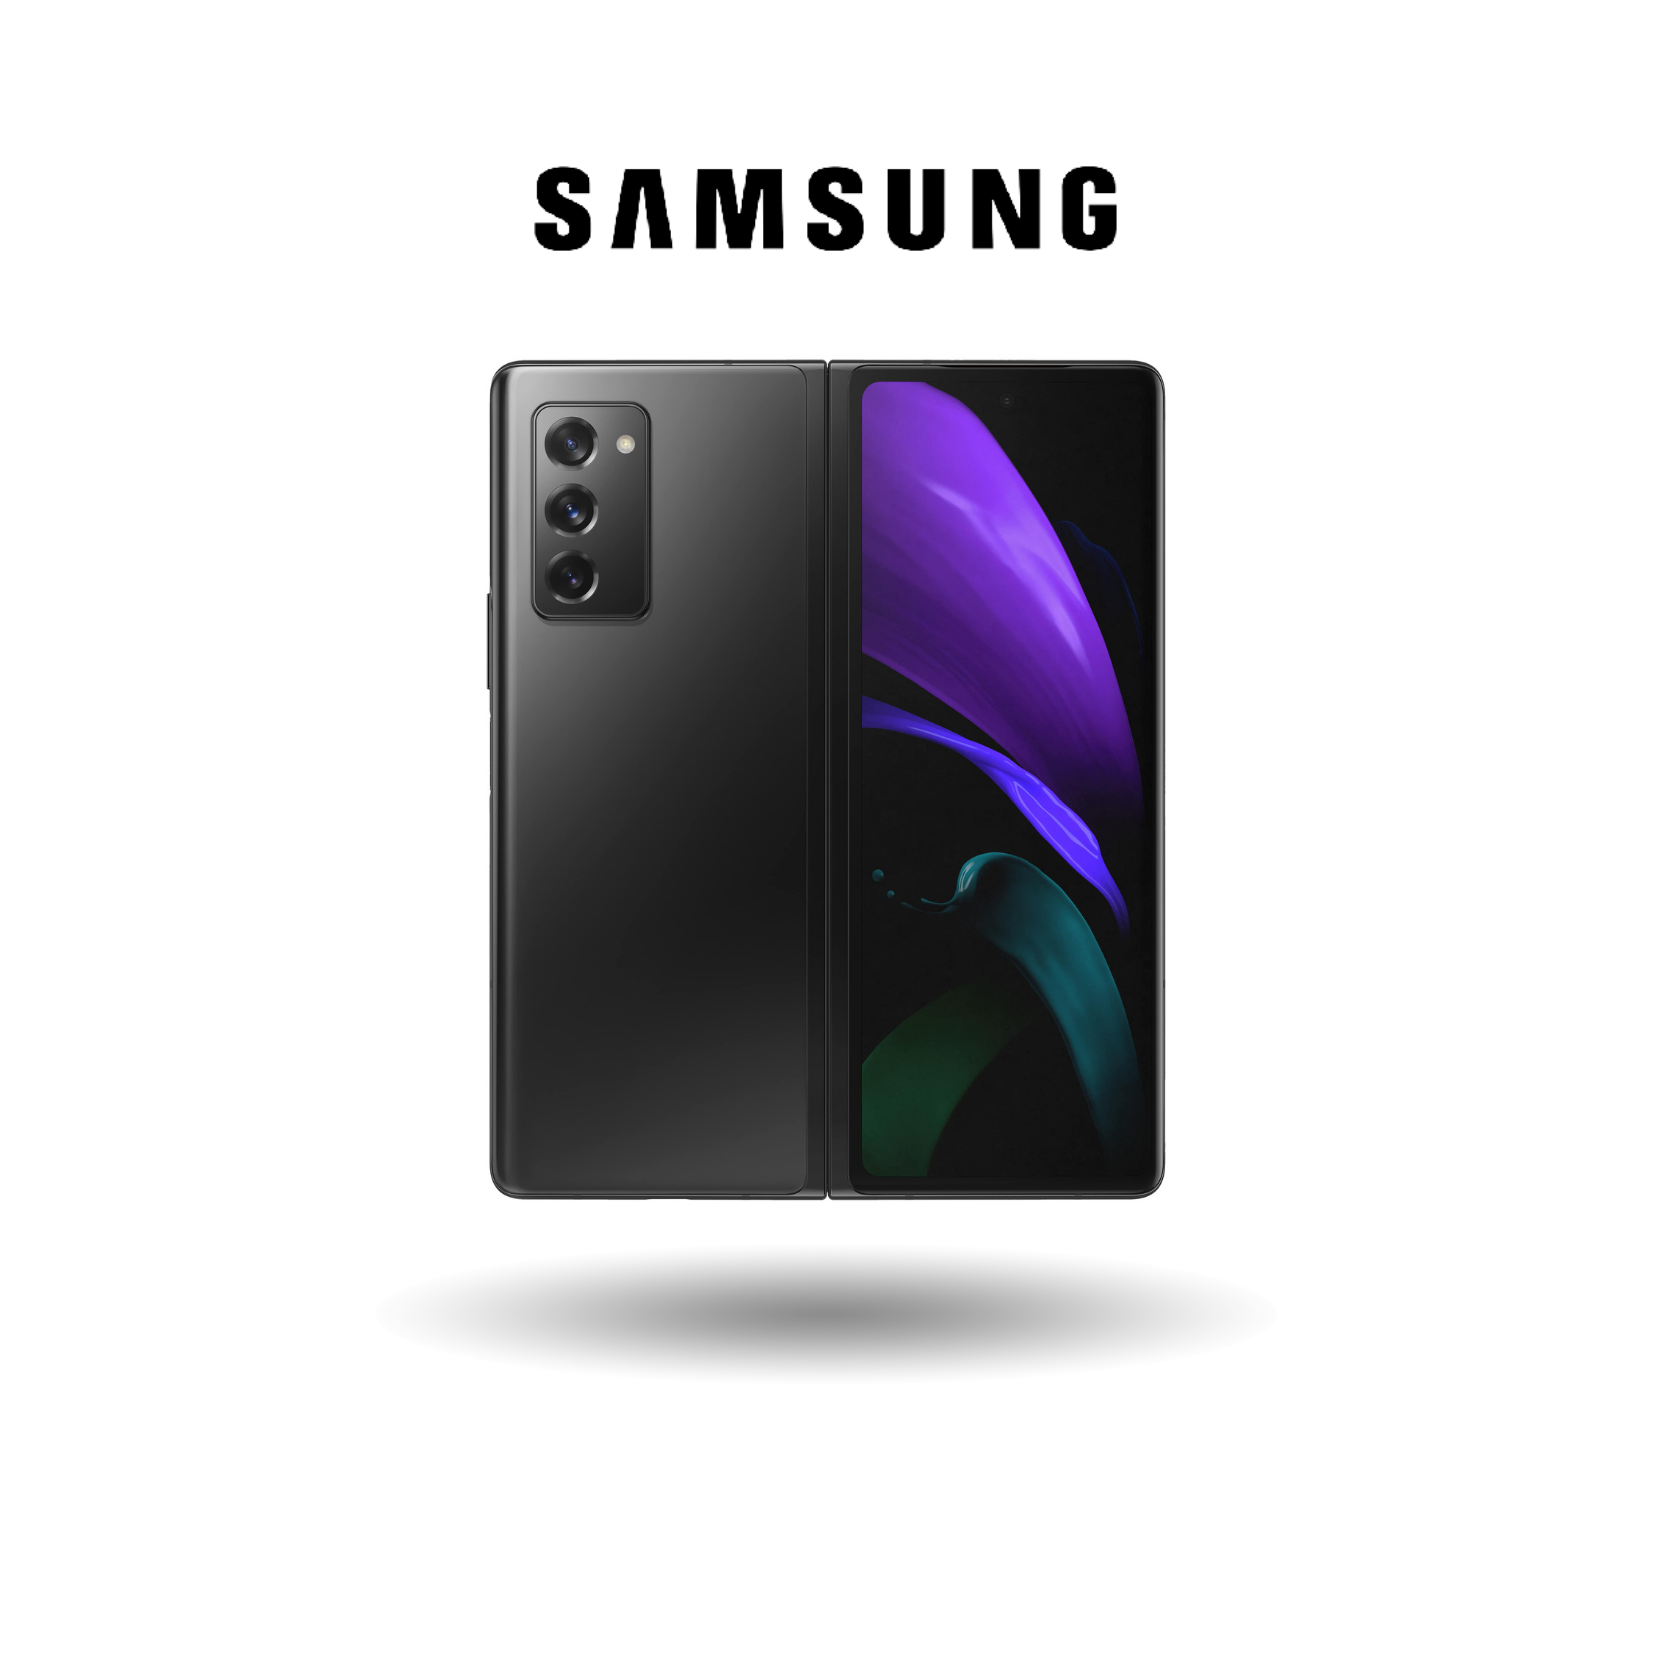 Samsung Galaxy Z Fold 2 5G - 12GB + 256GB  7.6” AMOLED Main Display  4500mAh Large Battery